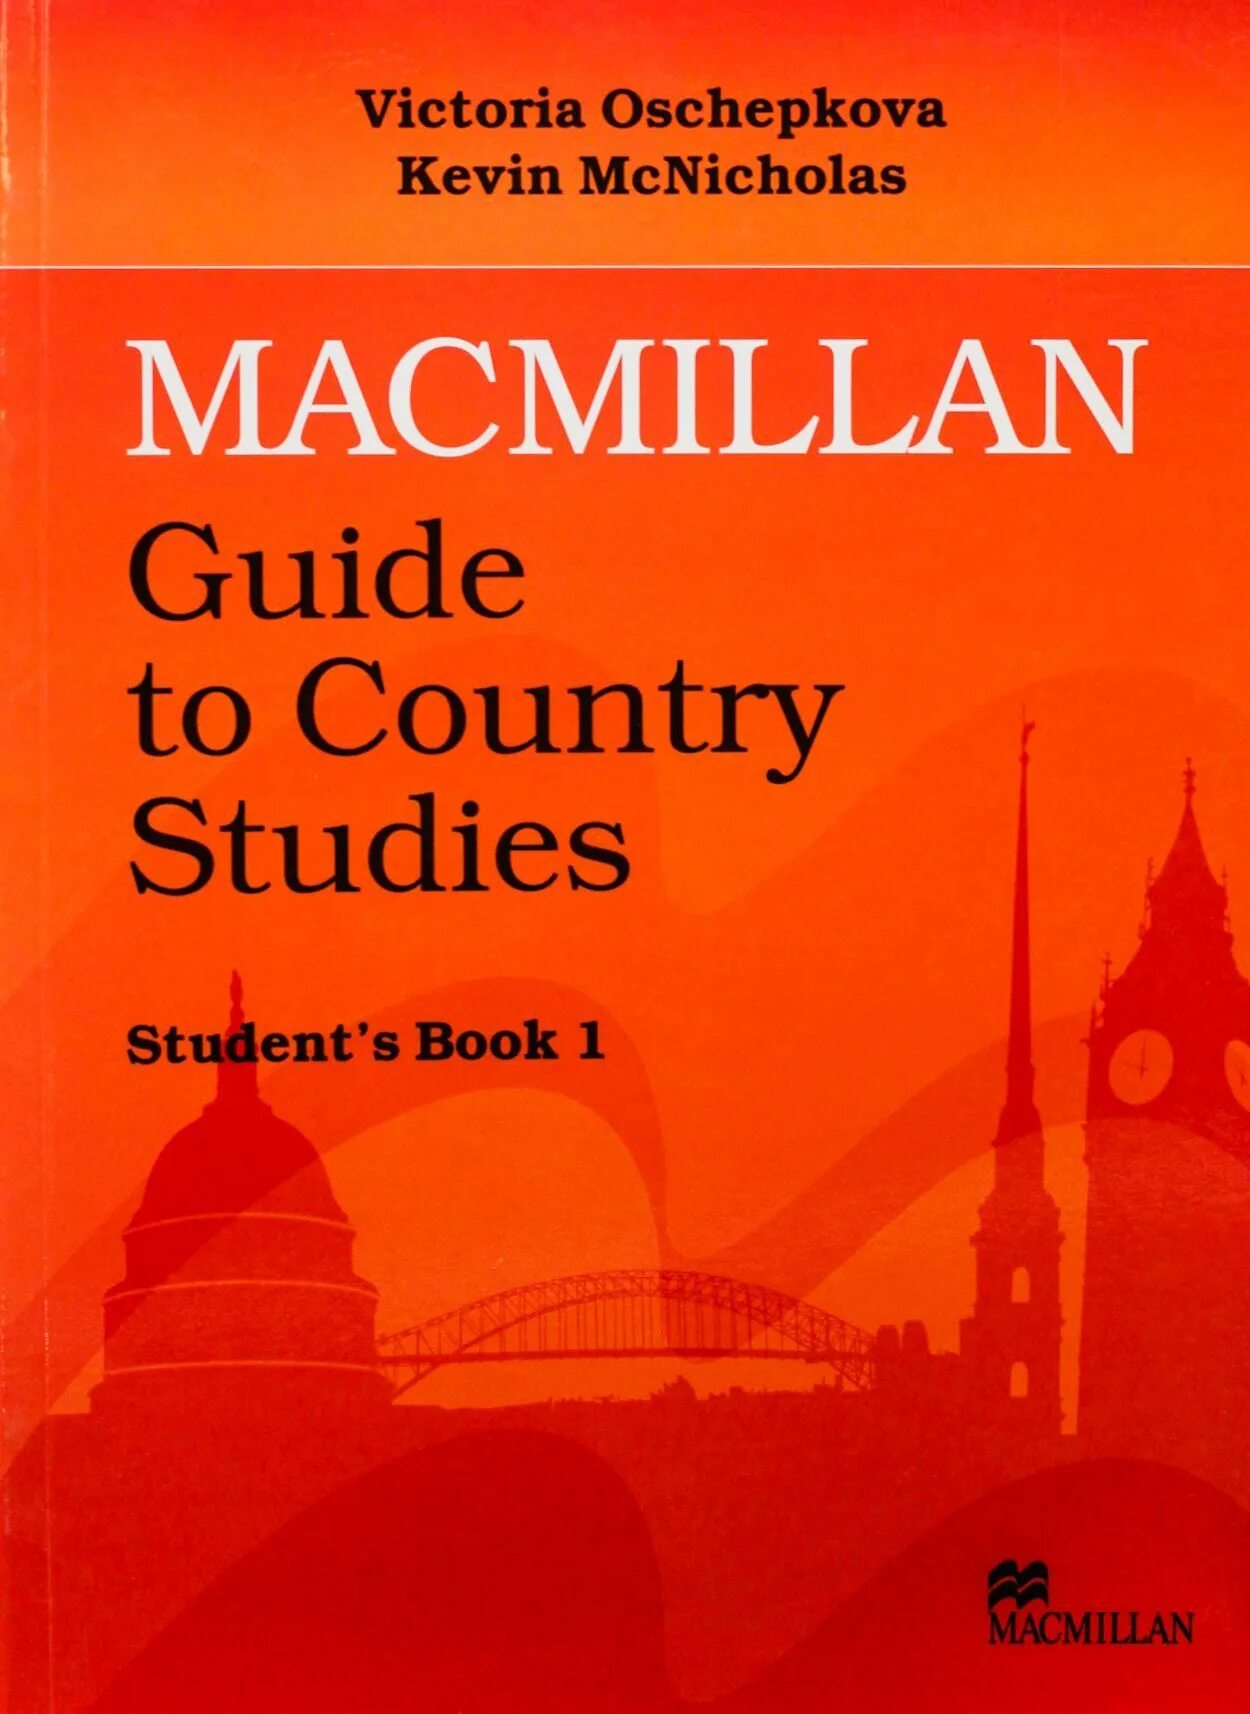 Macmillan s book. Macmillan Guide to Country studies. Макмиллан учебник. Country study учебник. Macmillan students book.